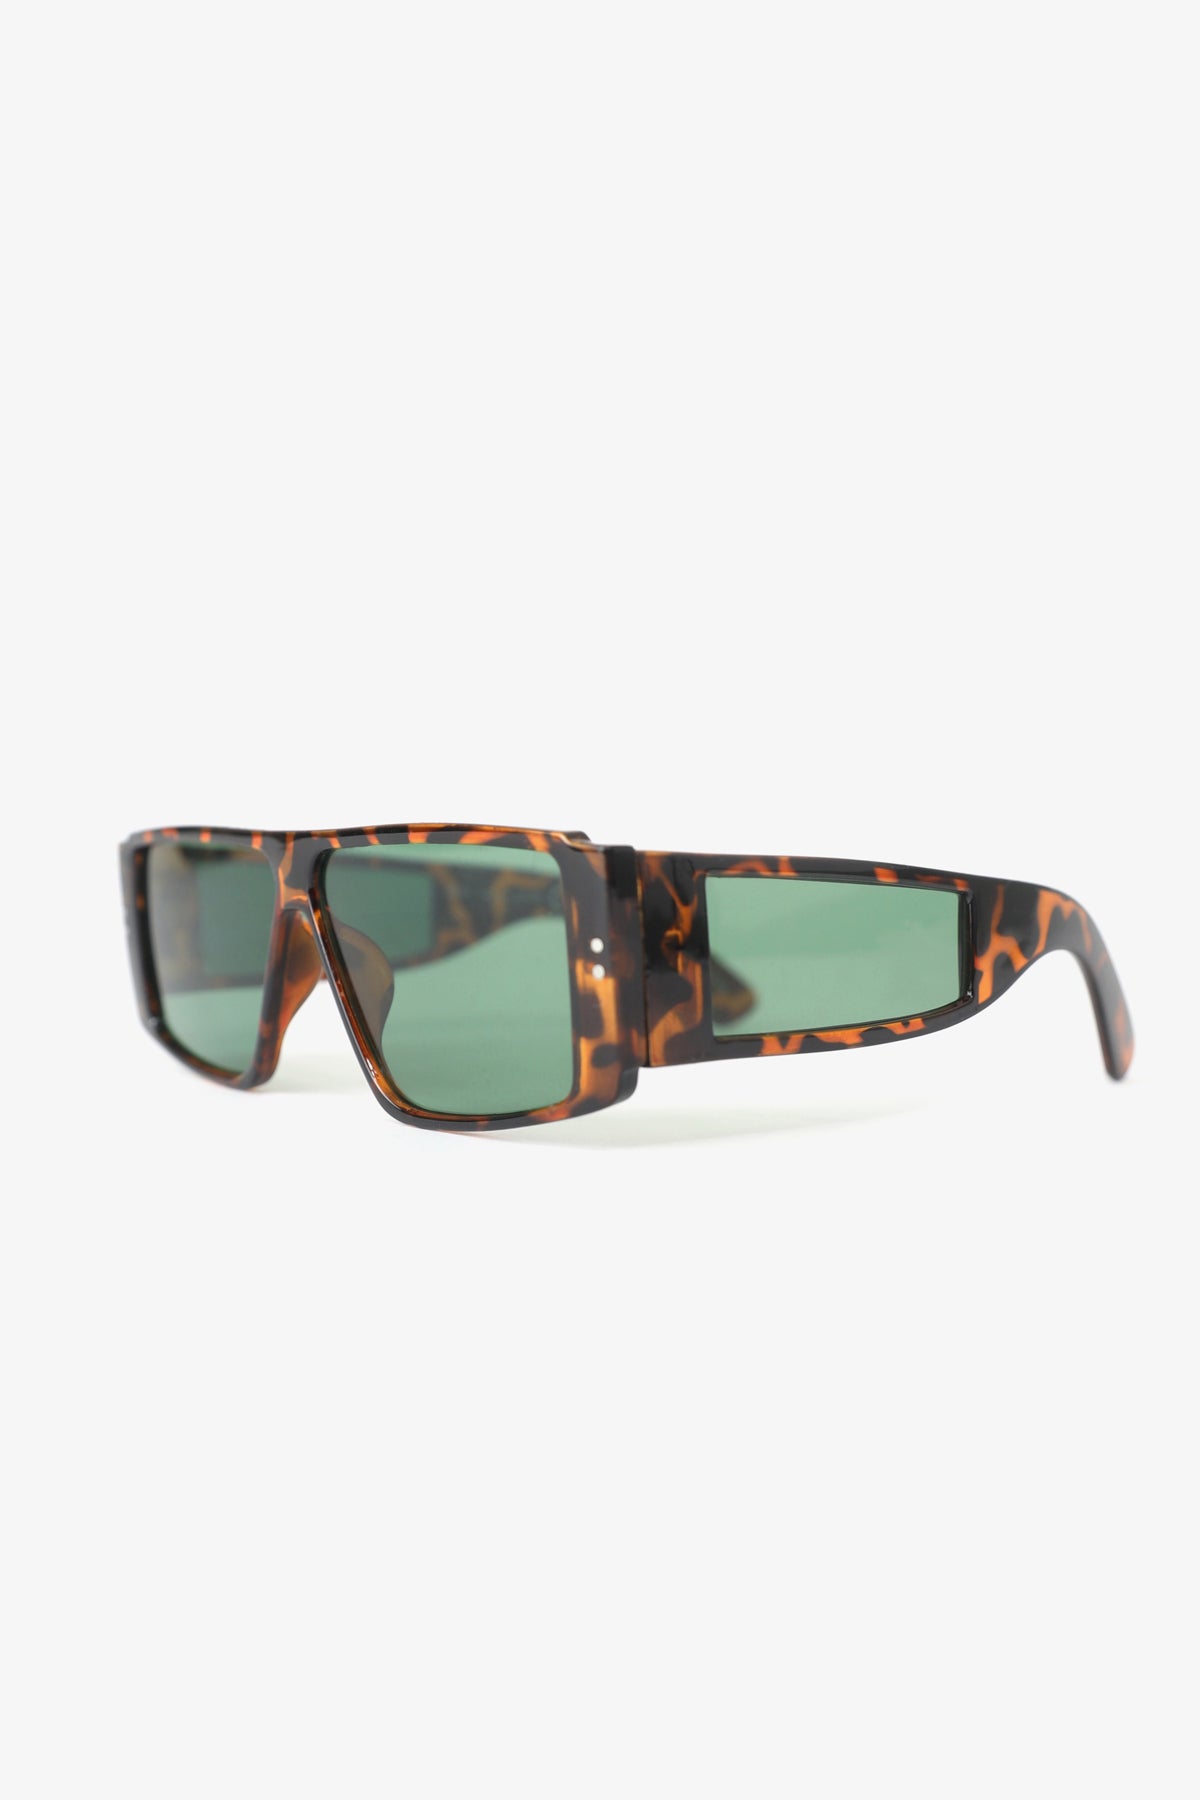 The Junie Tortoise square frame sunglasses.